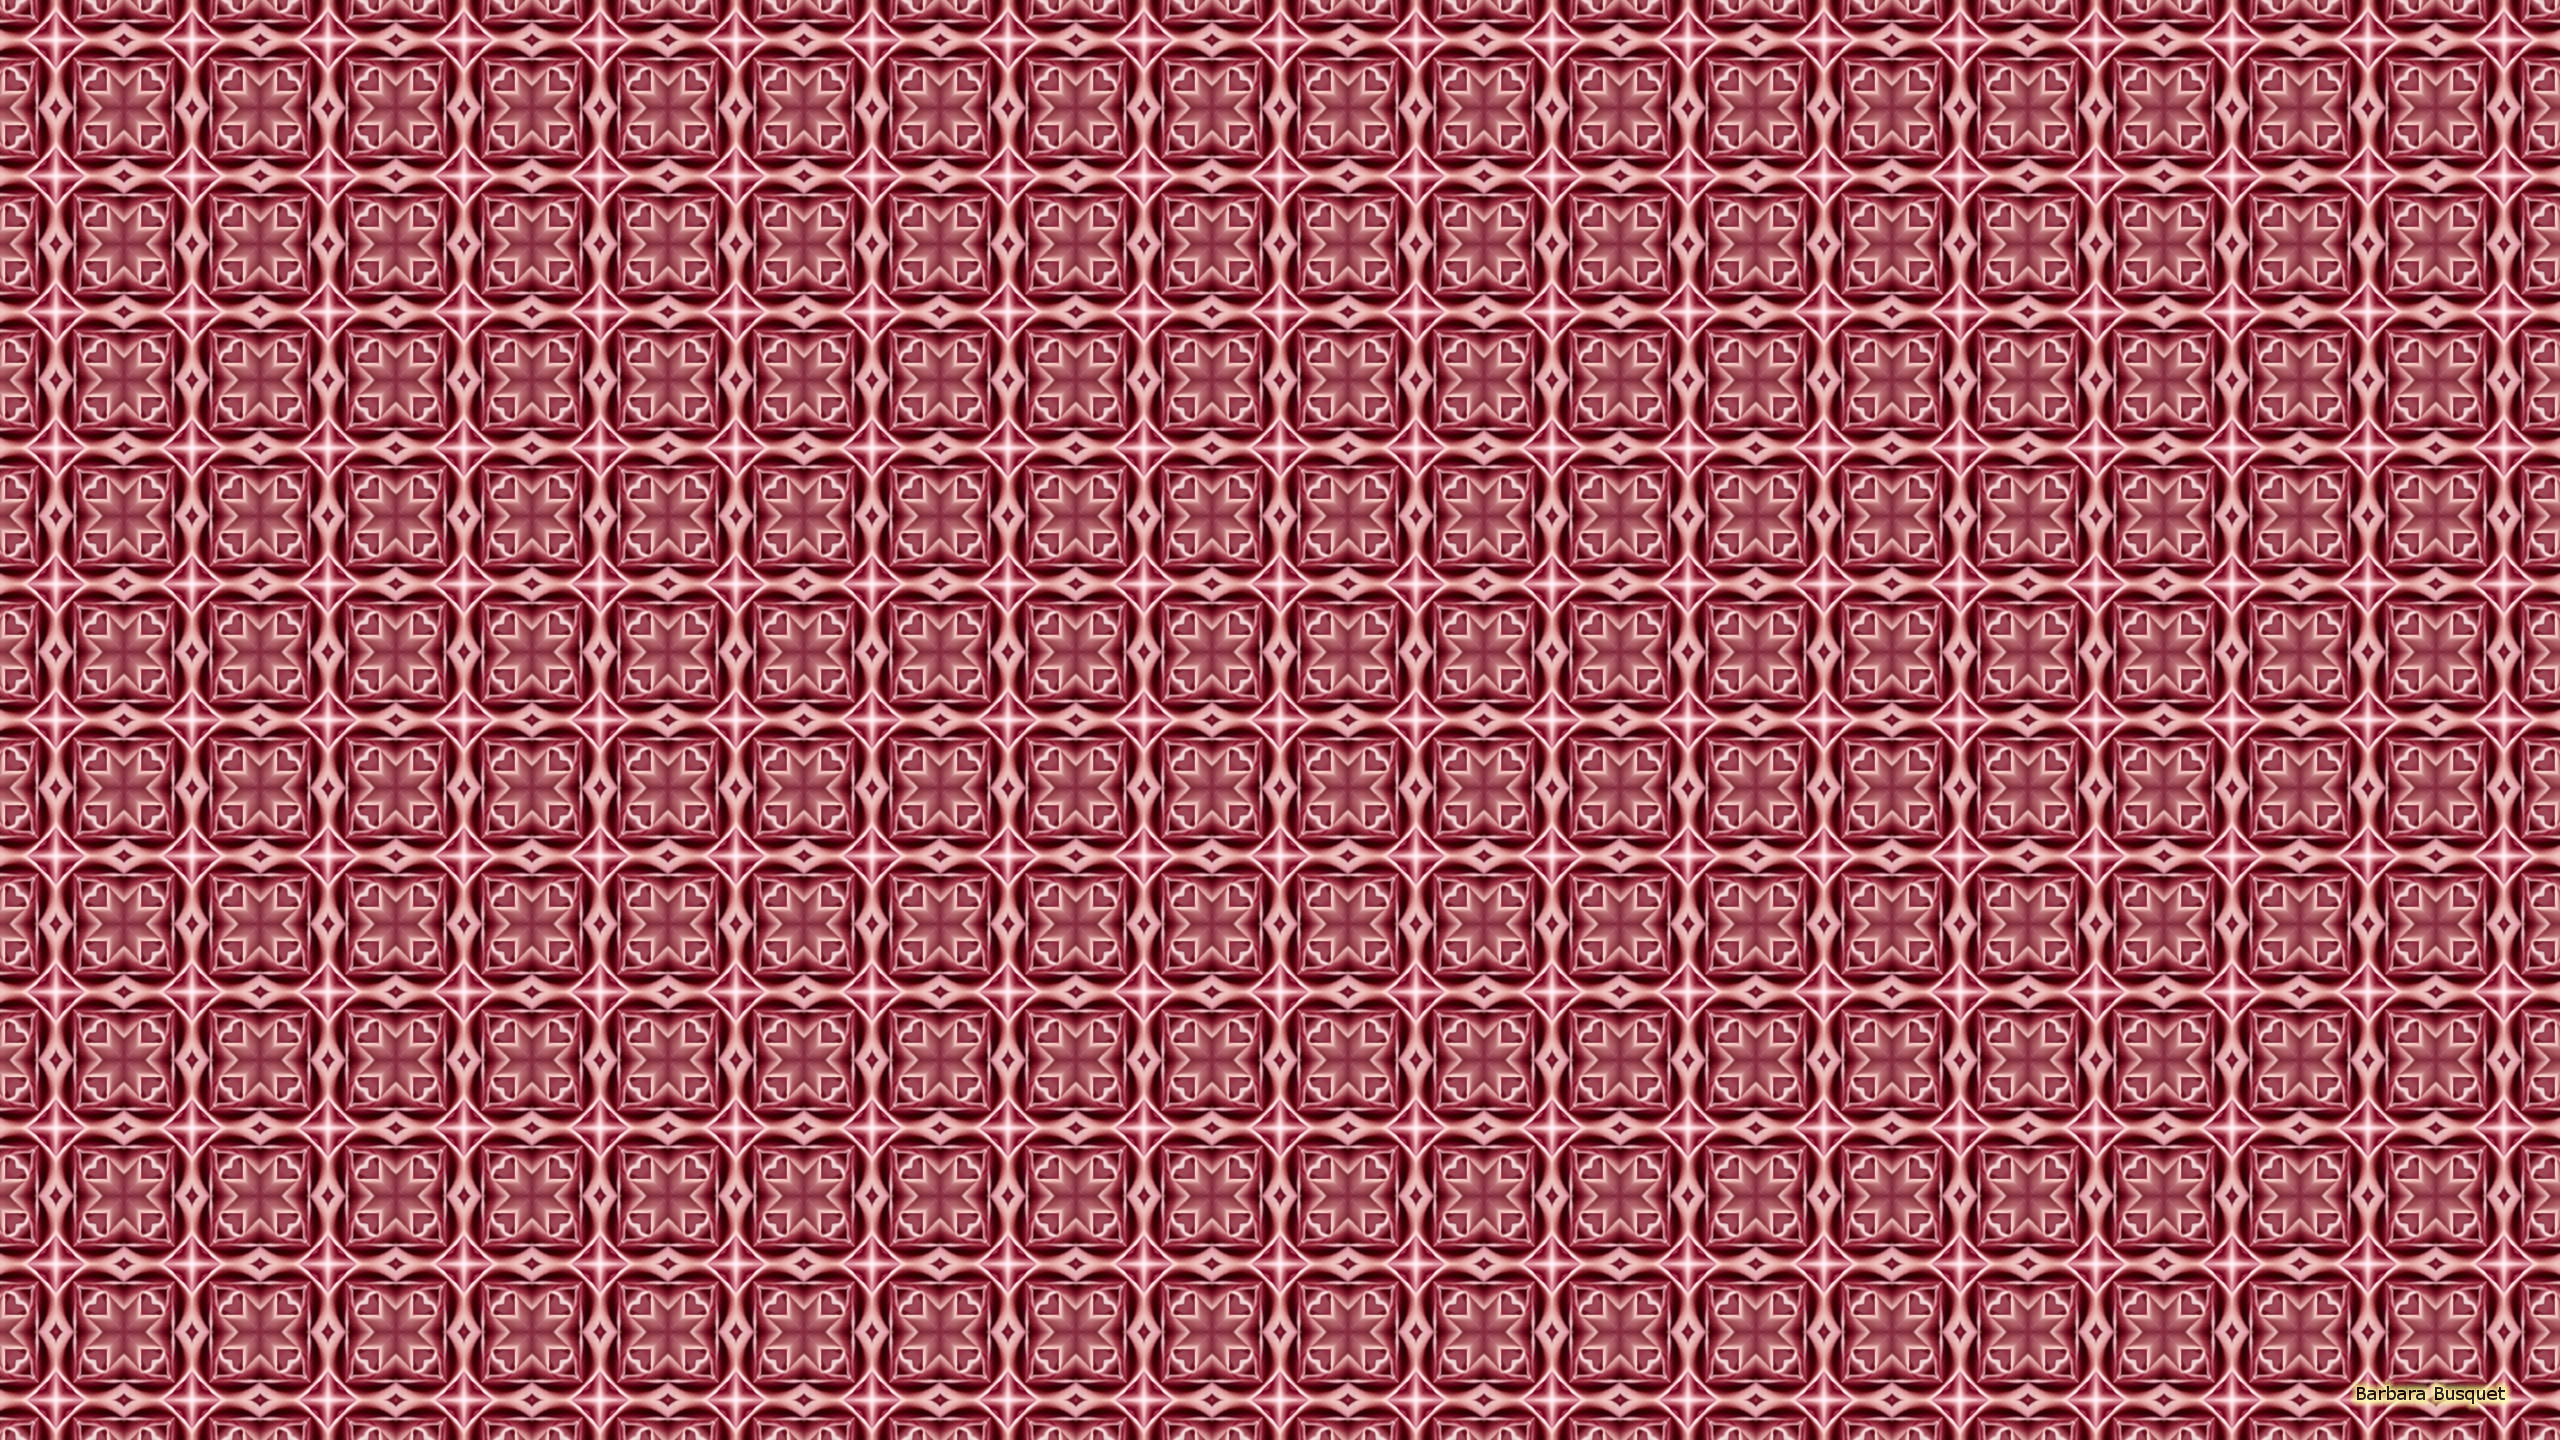 quadratische mustertapete,muster,rot,rosa,design,muster